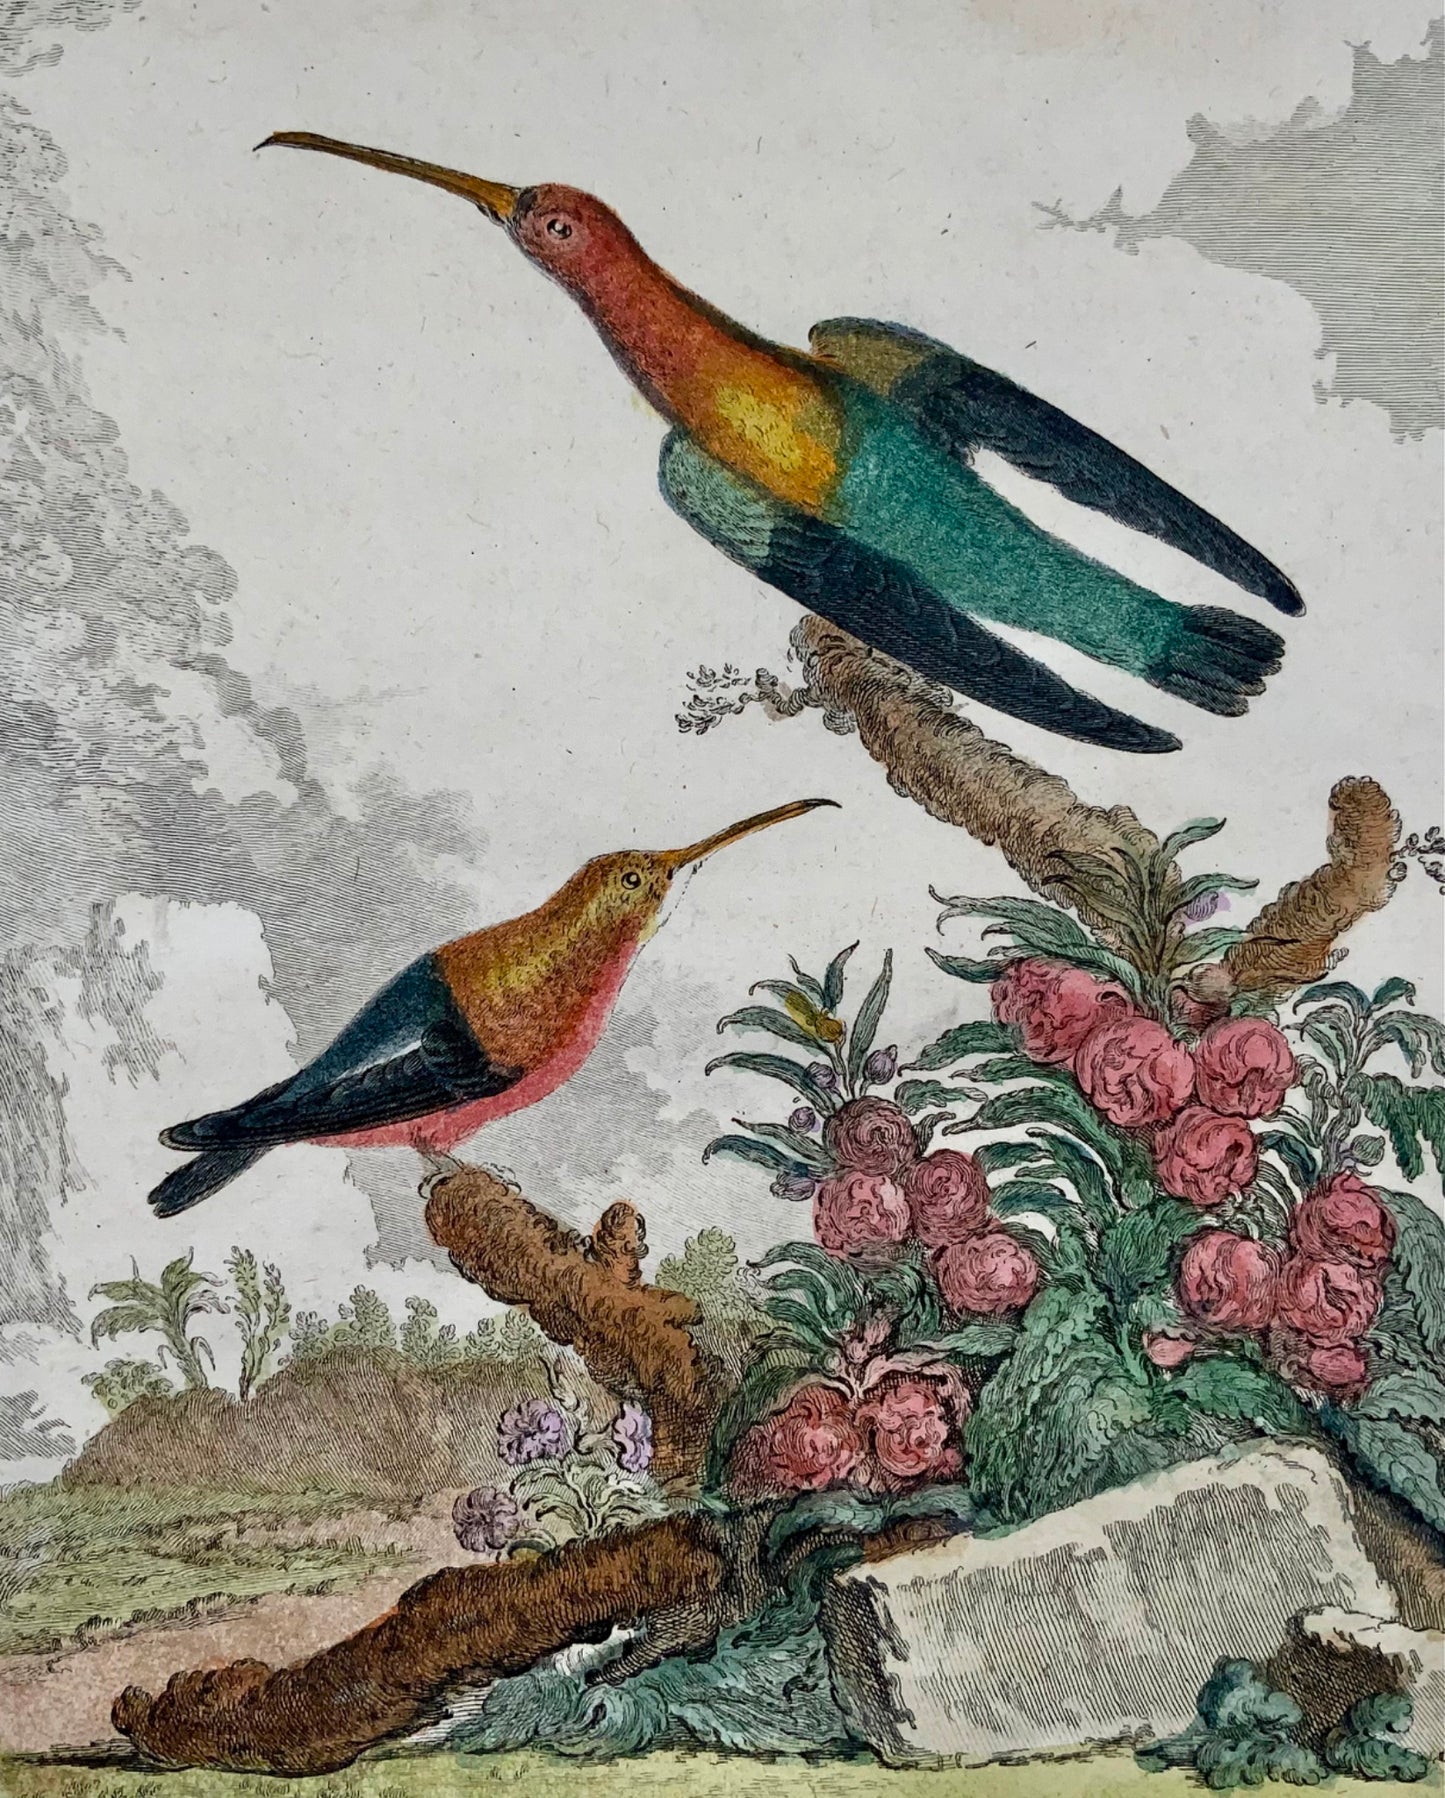 1779 de Sève ; Colibri COlibris - Ornithologie - Gravure 4to Large Edn